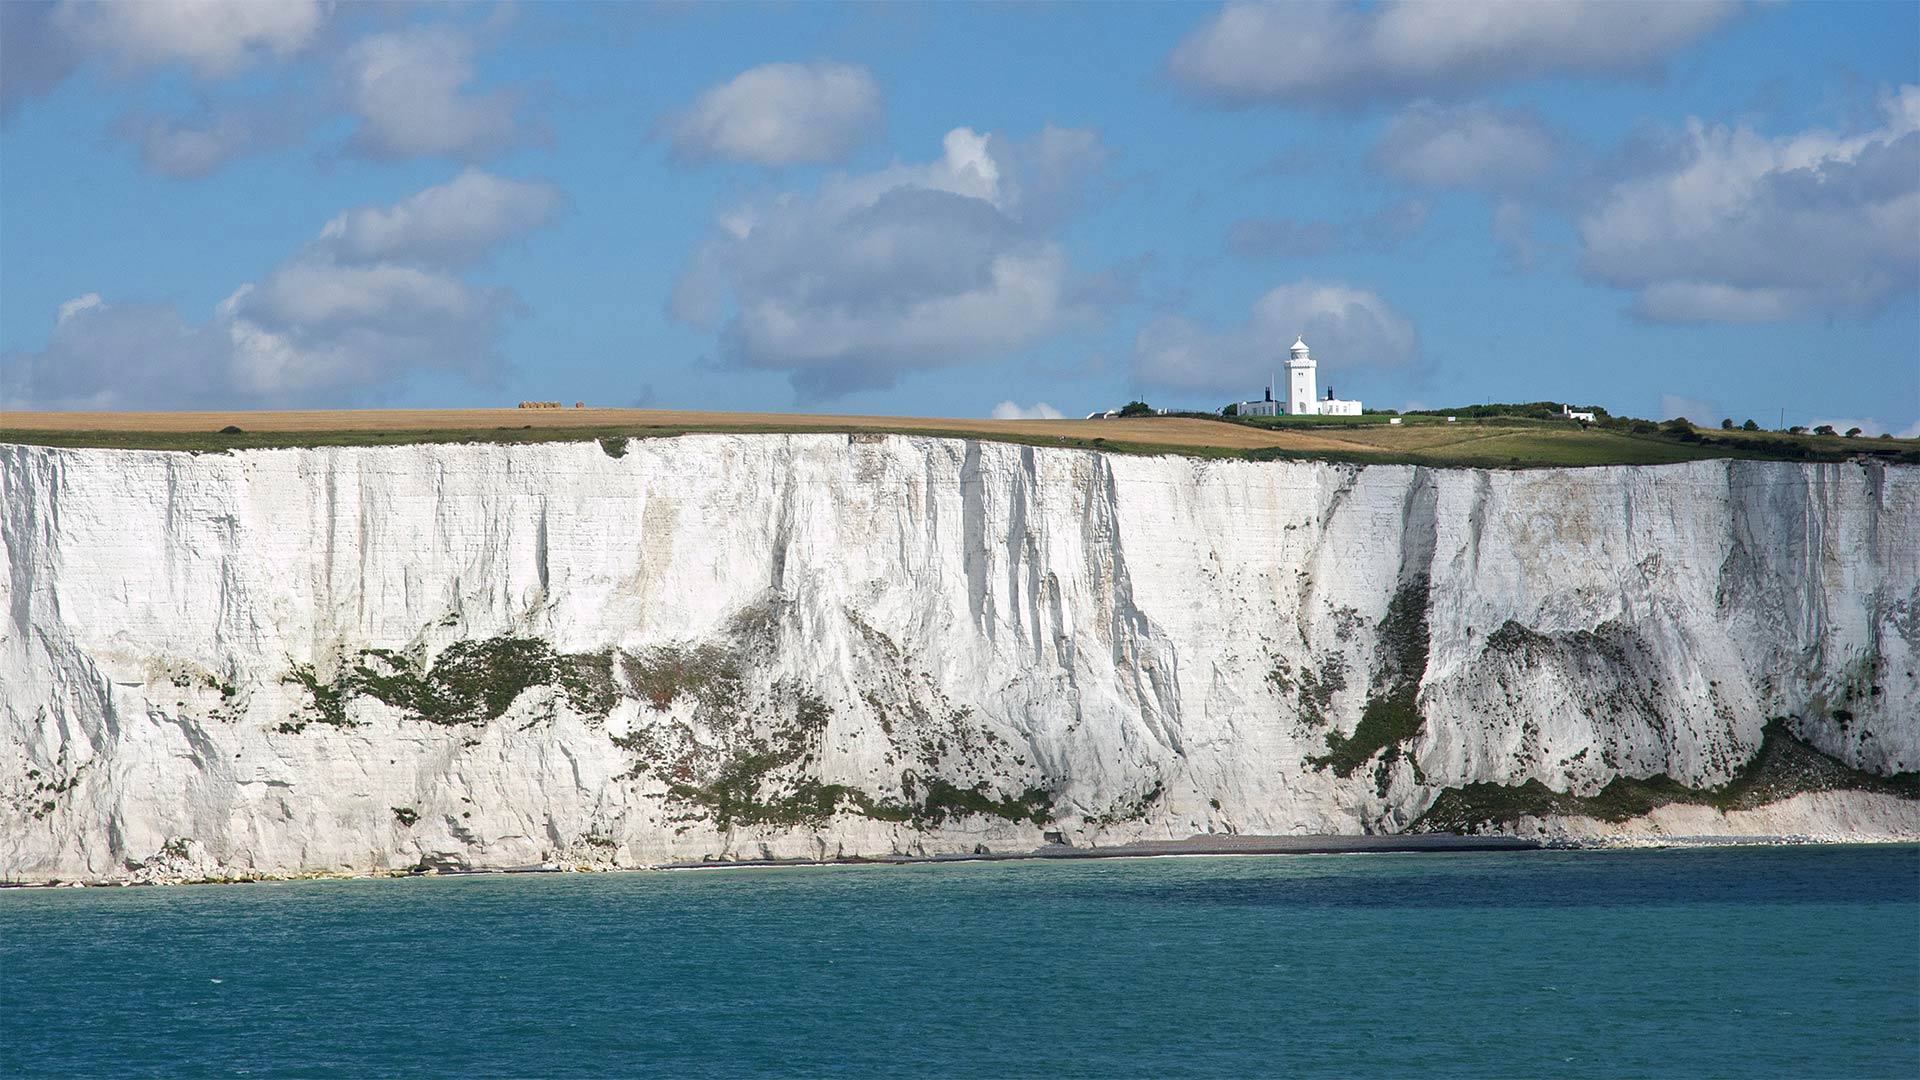 White Cliffs of Dover, England - LisaValder/Getty Images)